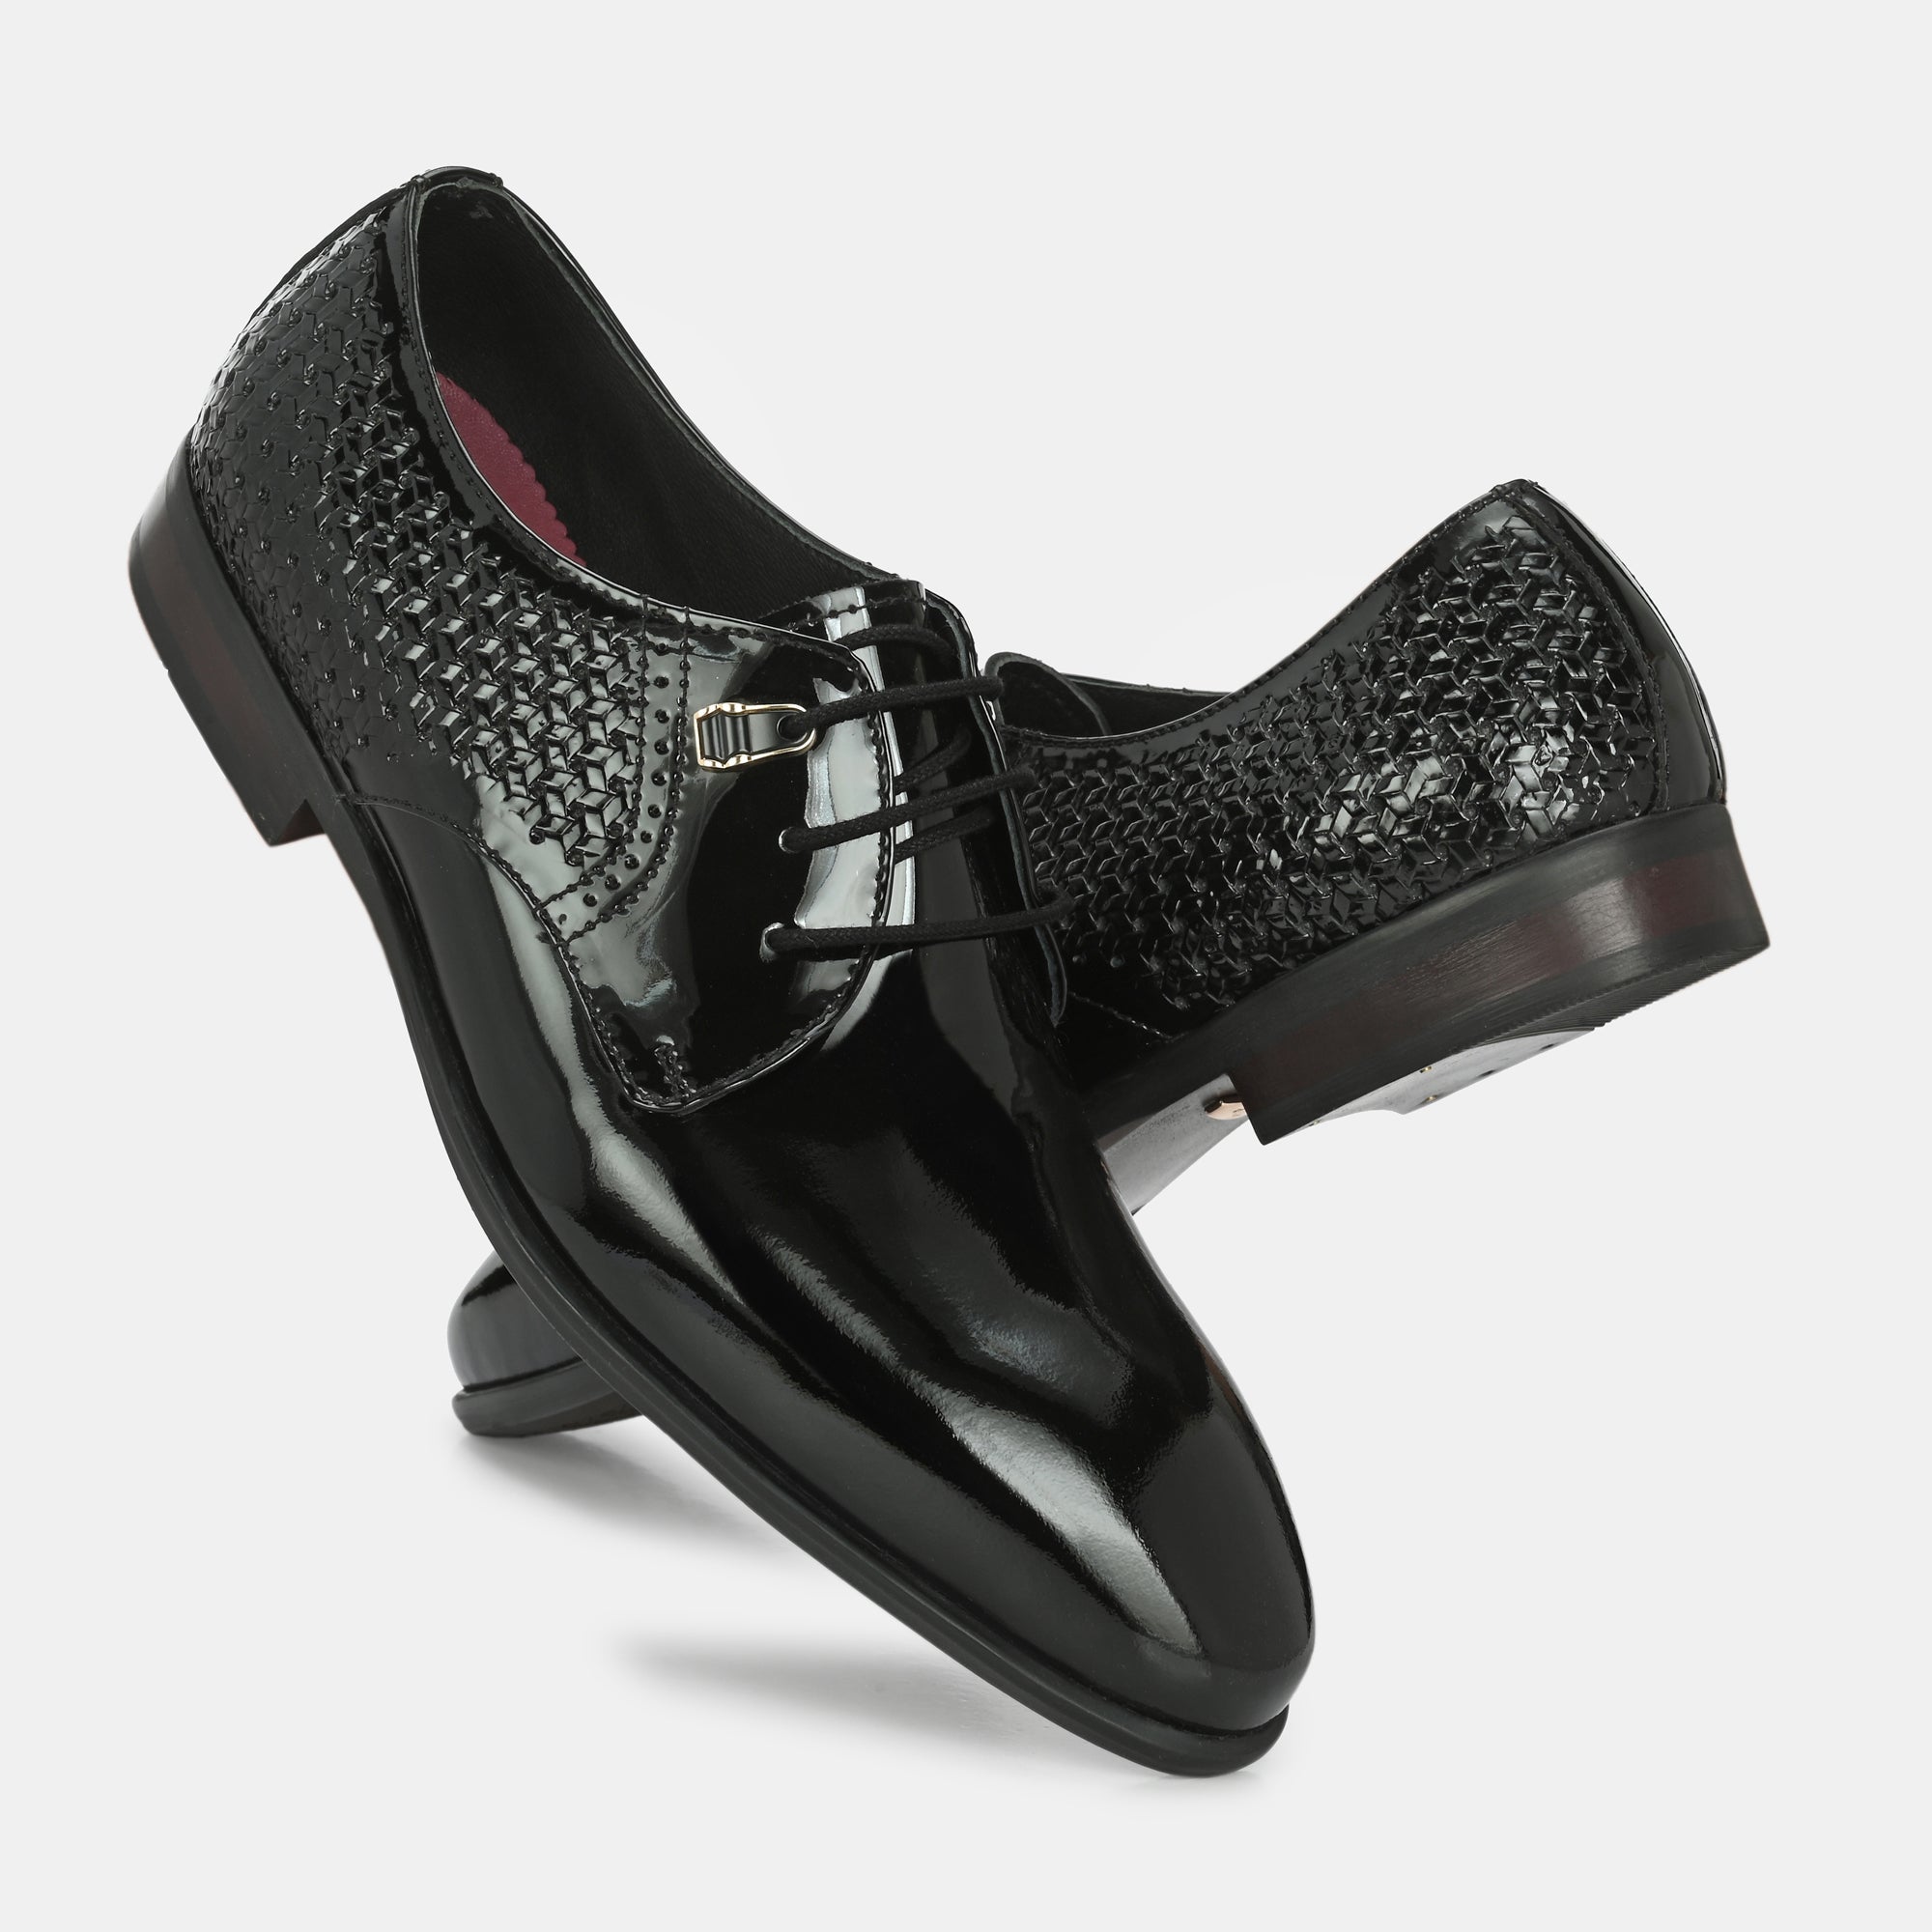 Luxury shoes for men - Balenciaga black patent leather Derbies